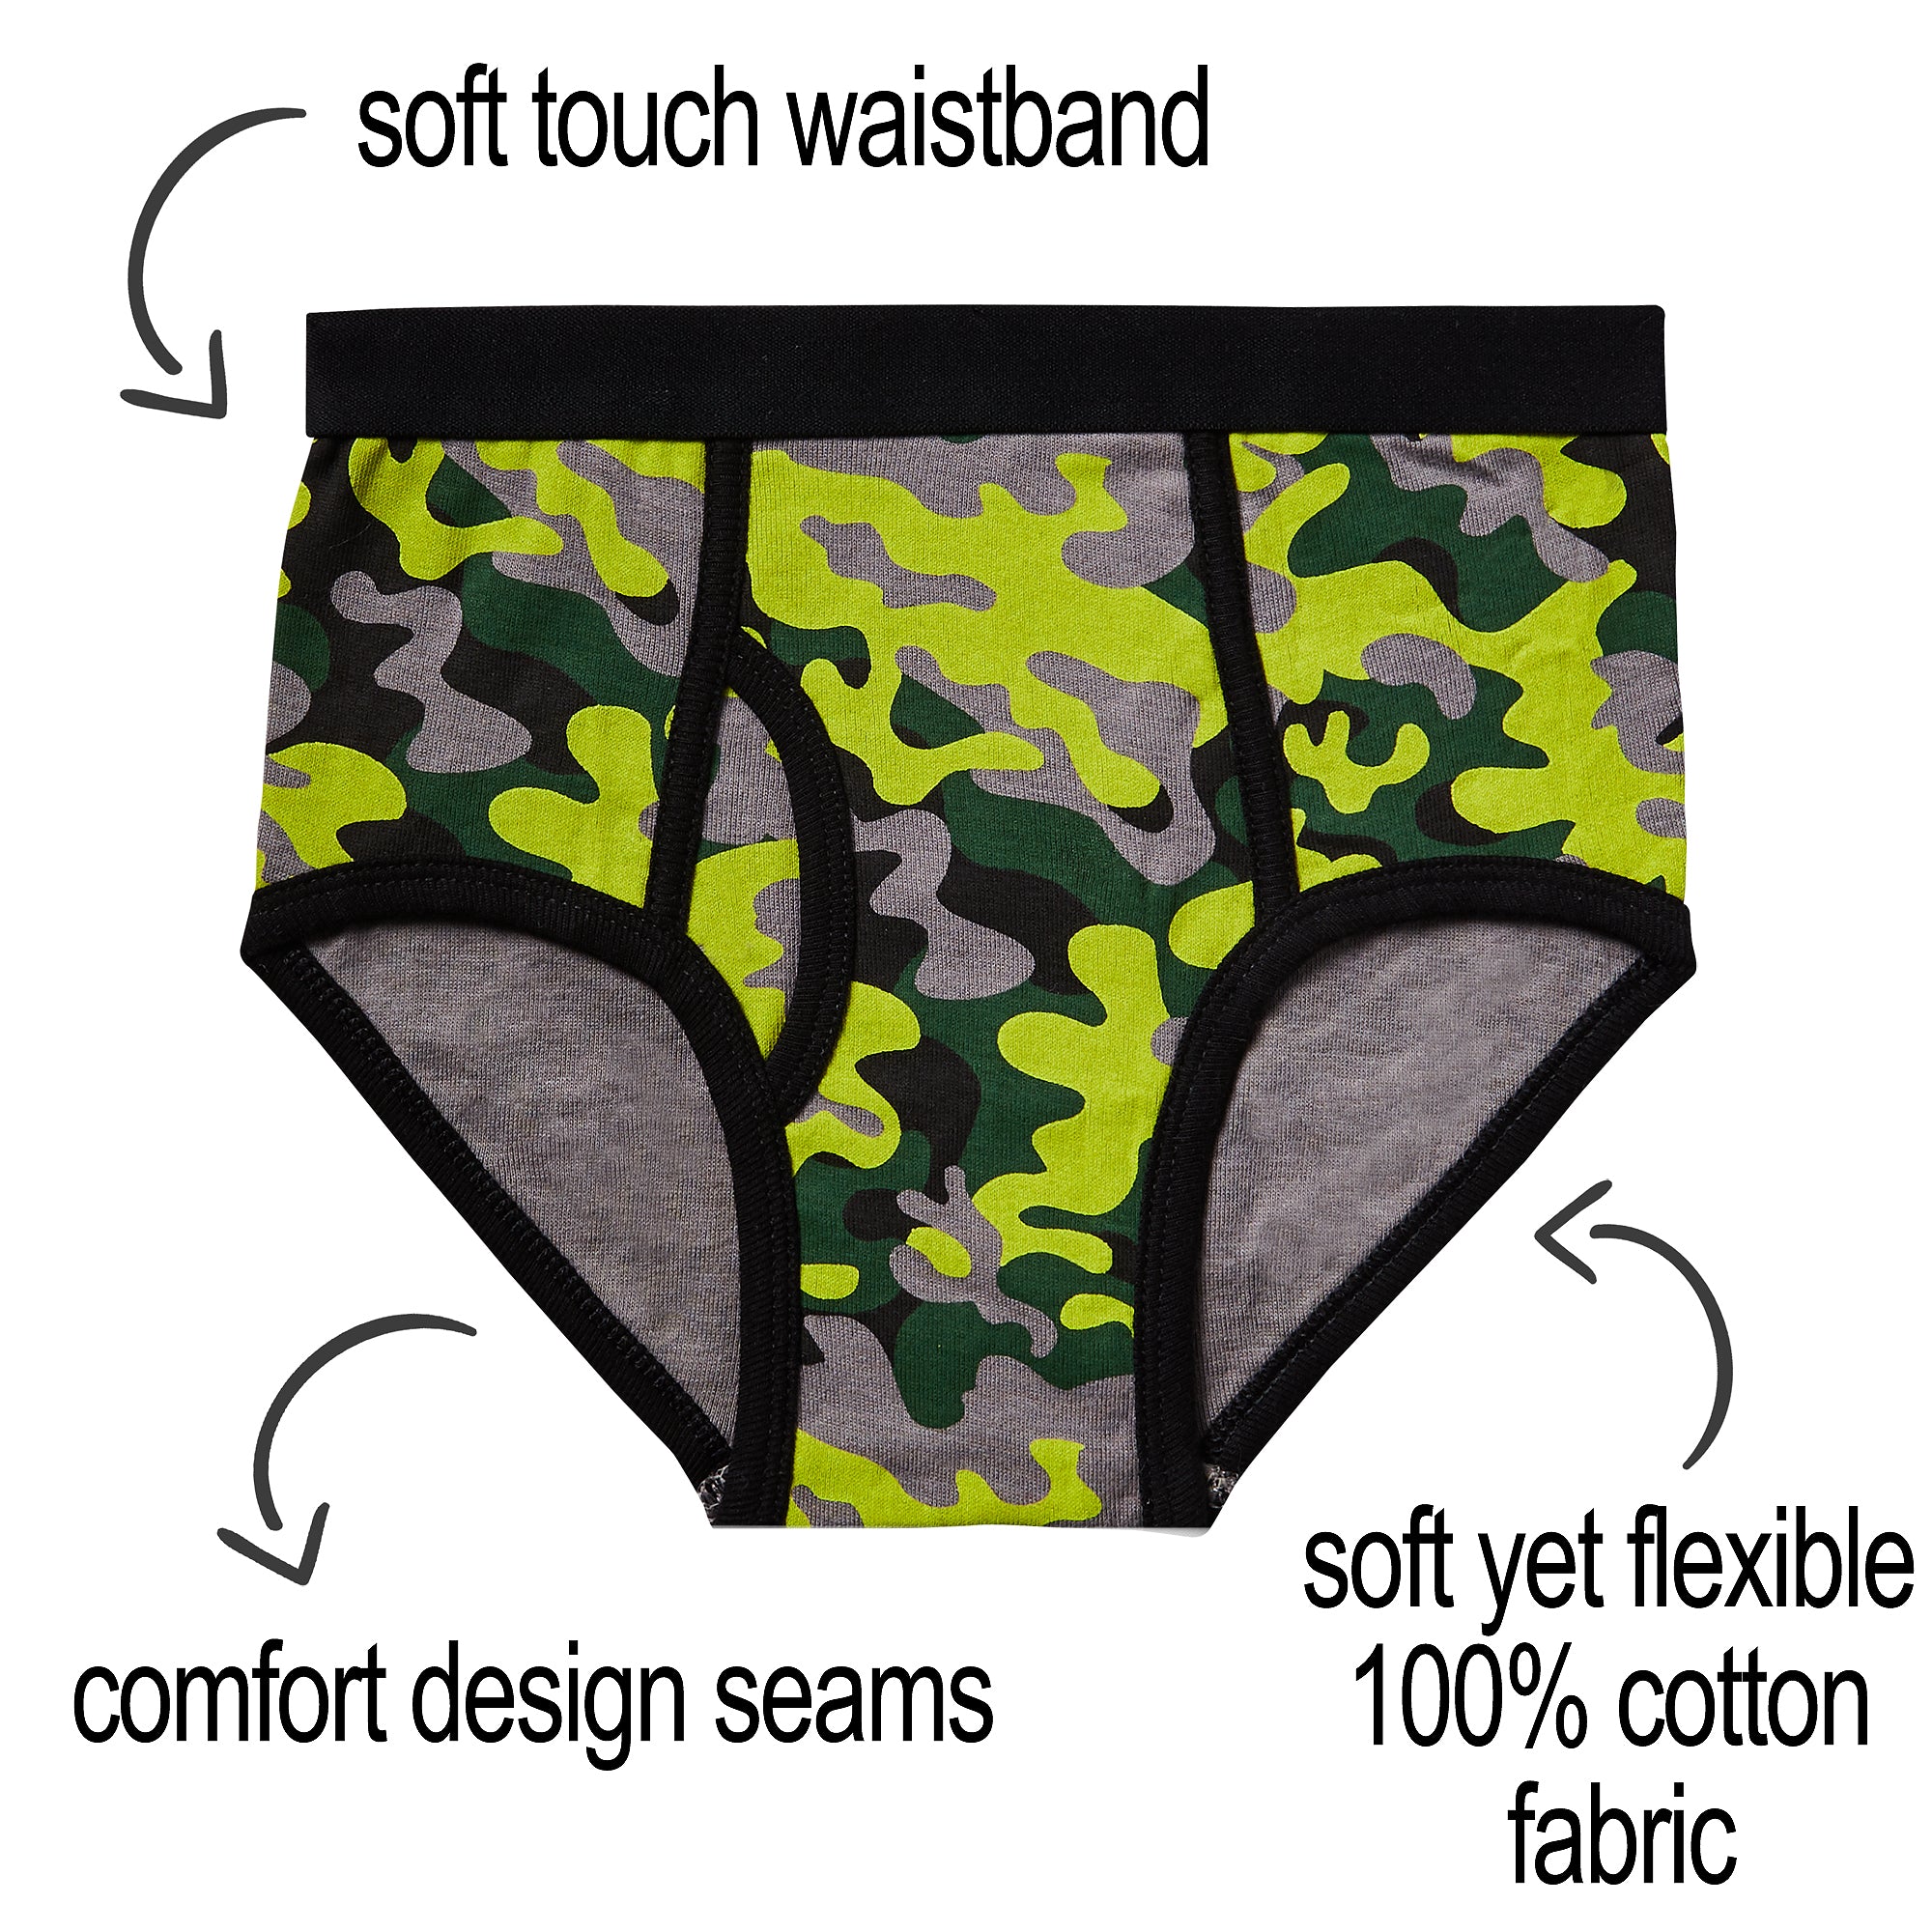 Mallary by Matthew 100% Cotton Boys Underwear 8 Pack Neon Camouflage –  Mallary by Matthew